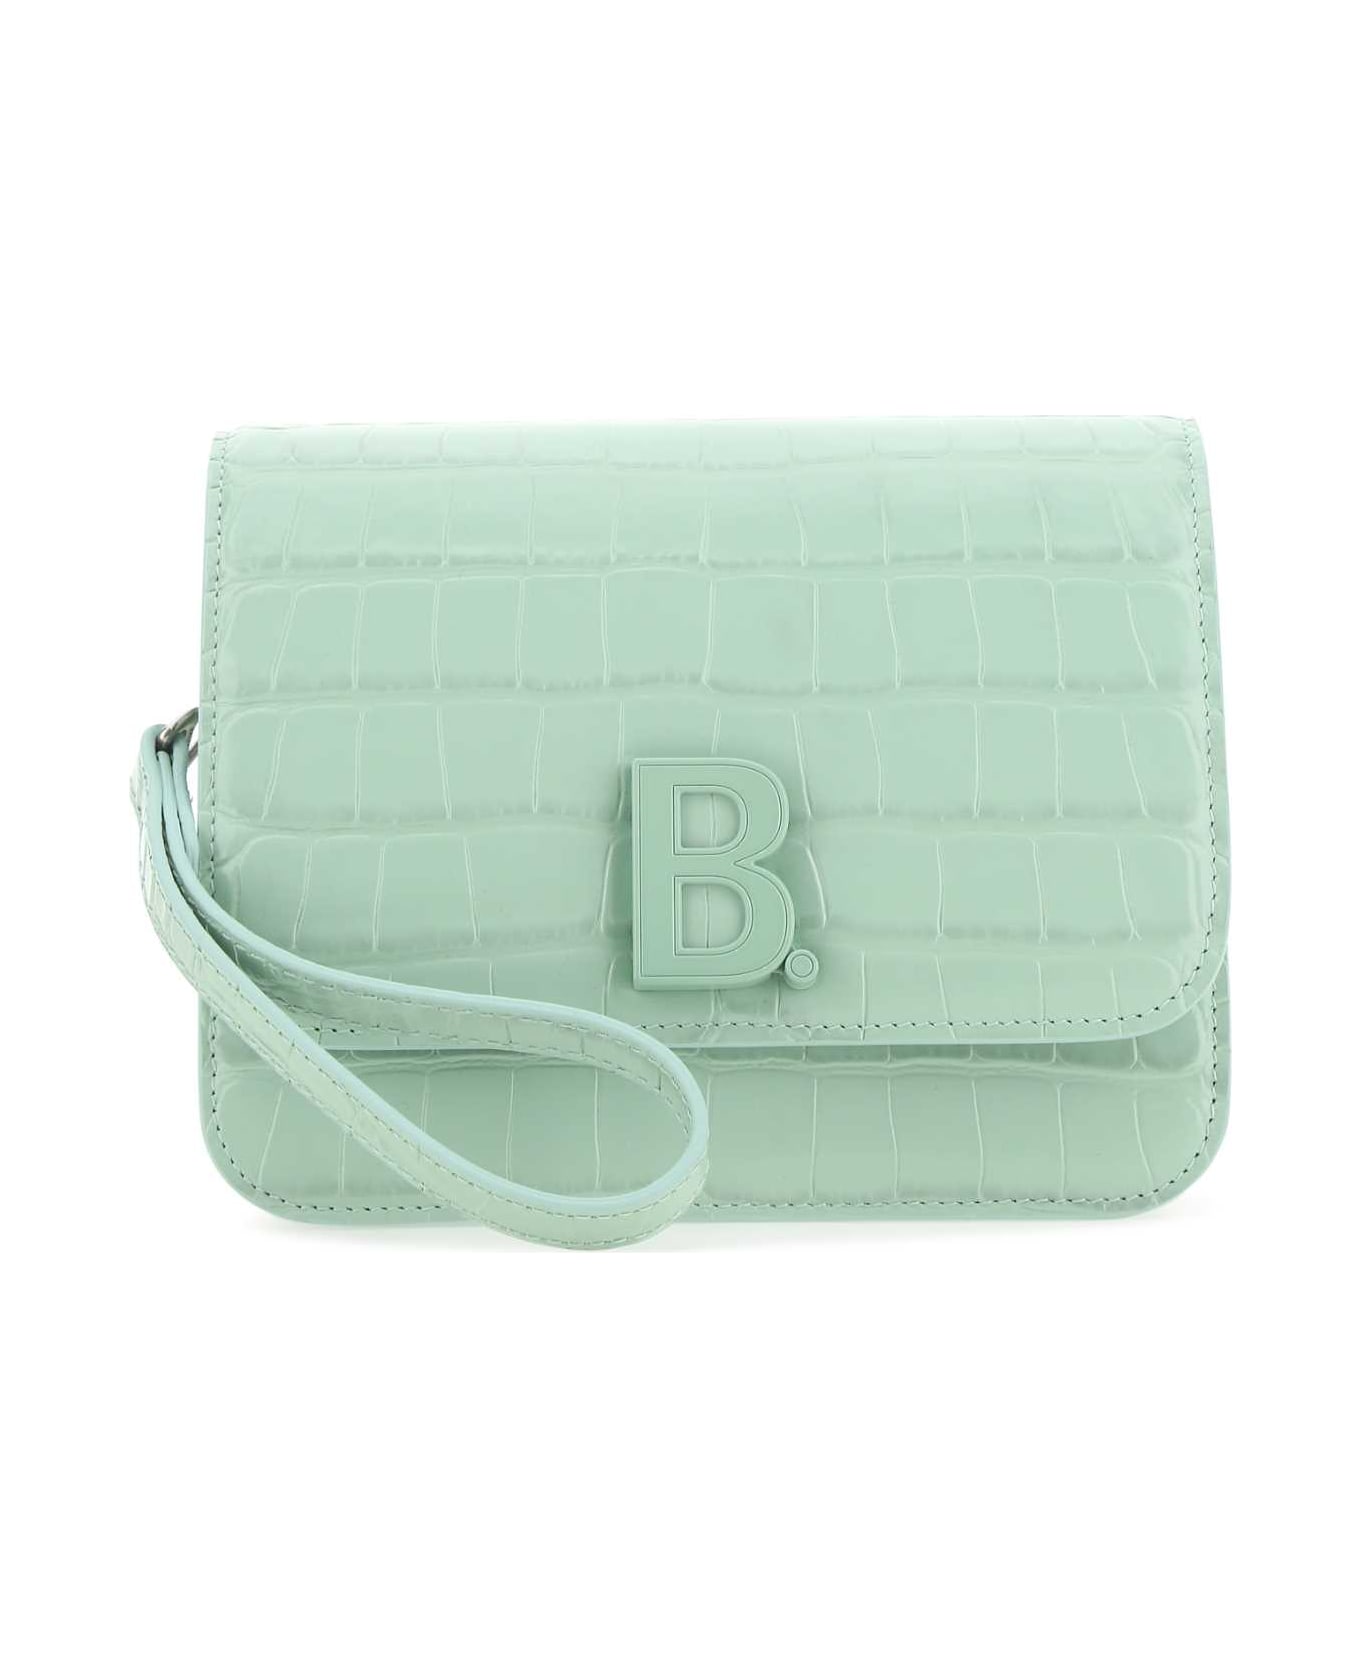 Balenciaga Sea Green Leather Small B Crossbody Bag - 3906